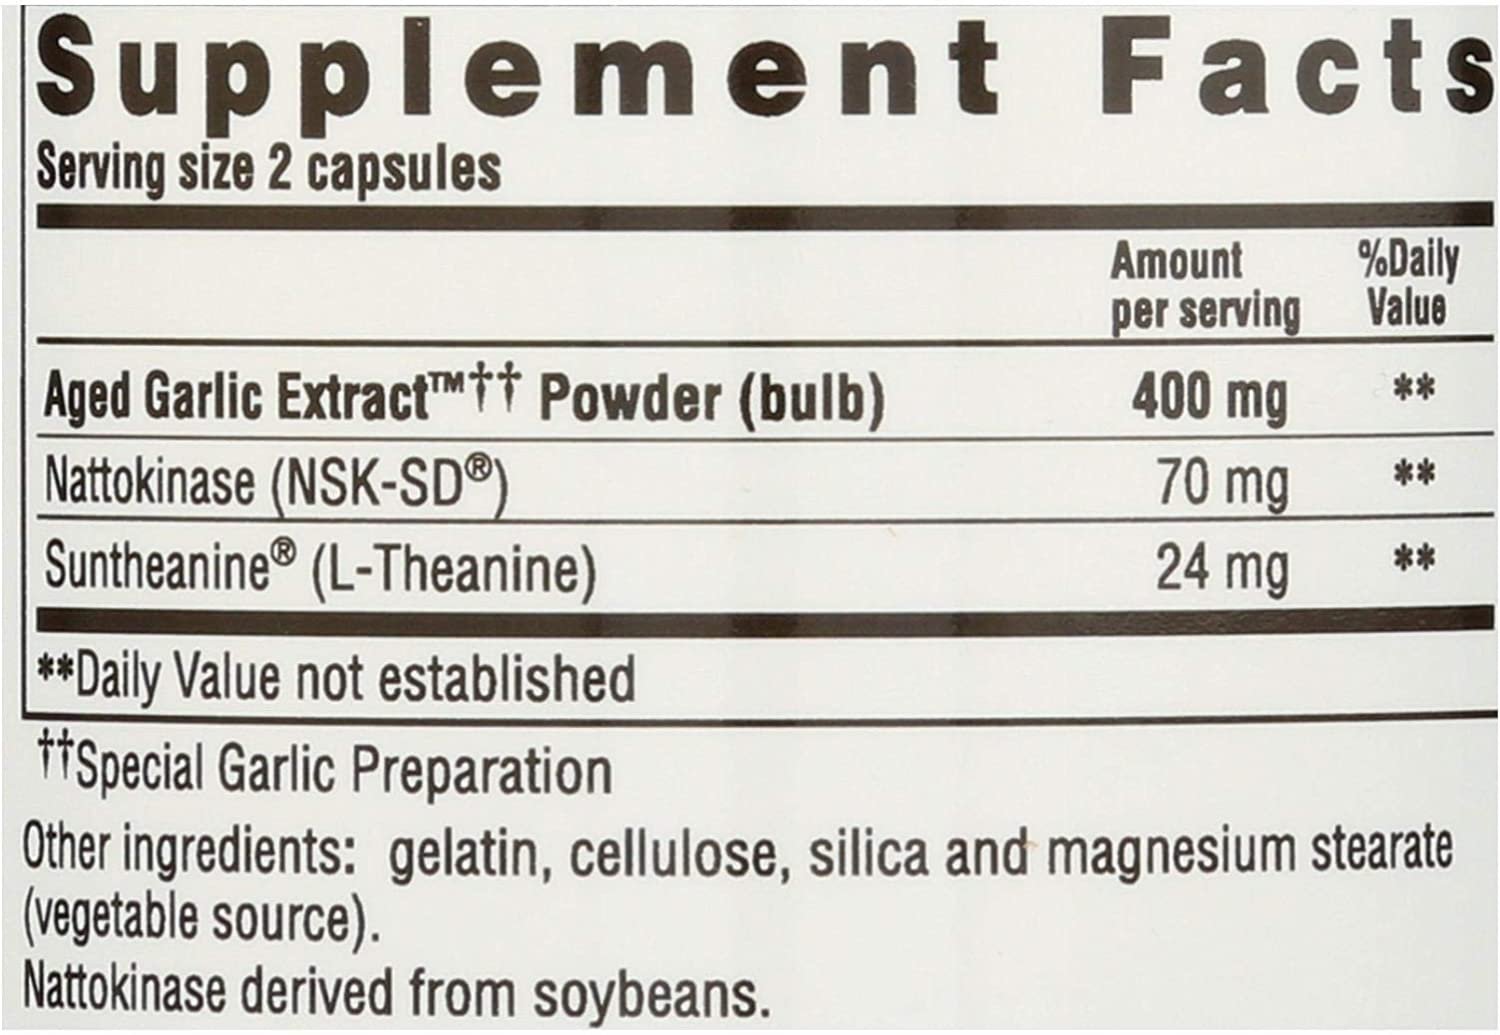 Kyolic - Aged Garlic Extract Formula 109 Blood Pressure Health - 80 Capsules